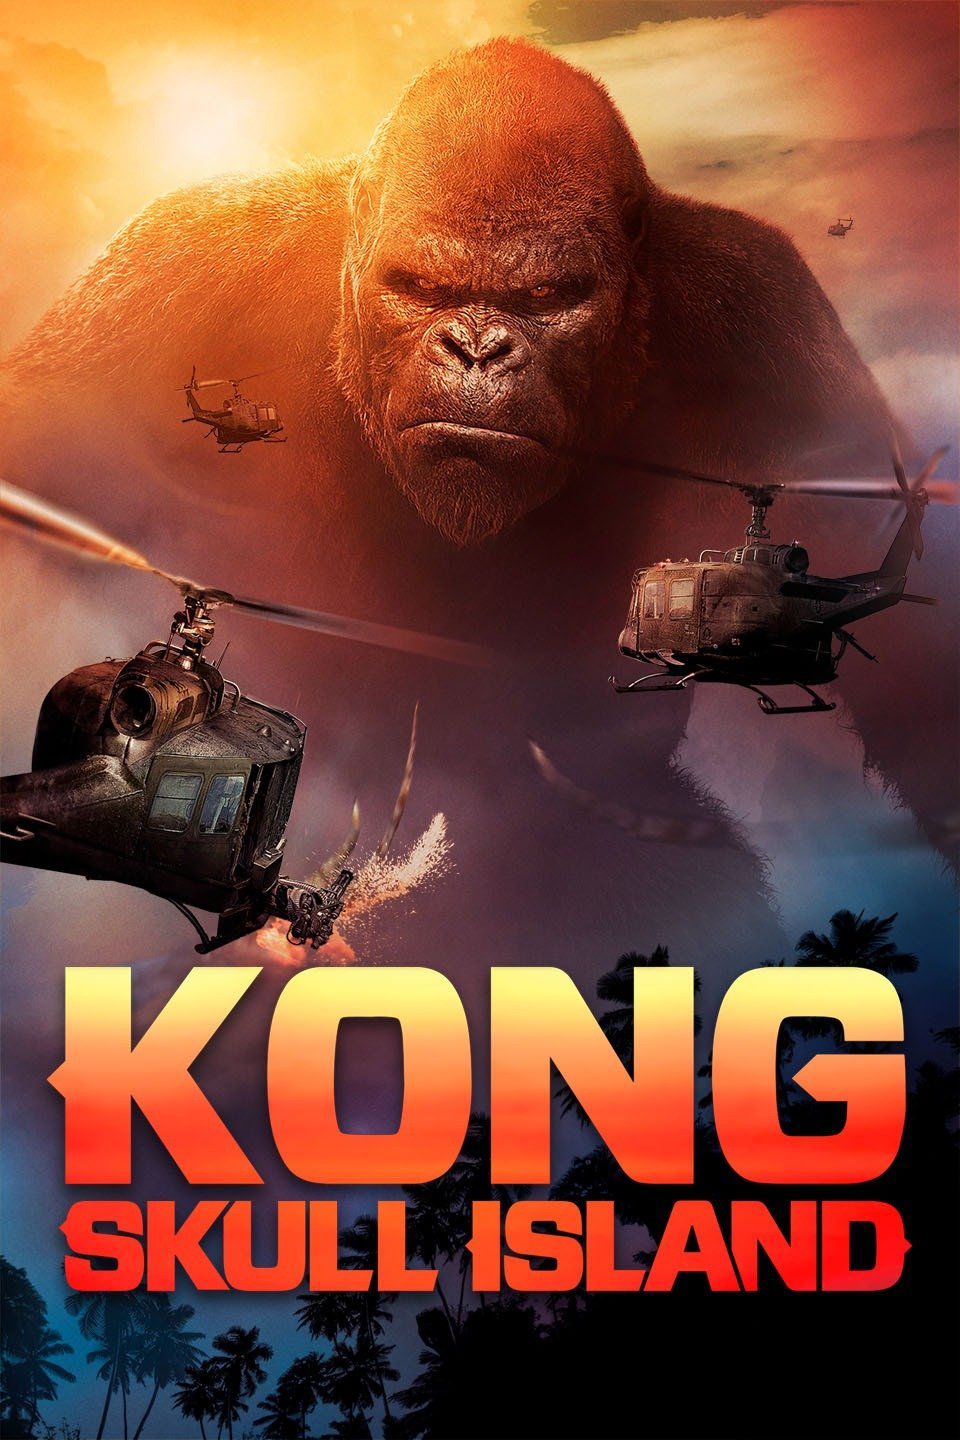 [MINI Super HQ] Kong: Skull Island (2017) คอง: มหาภัยเกาะกะโหลก [1080p] [พากย์ไทย 5.1 + เสียงอังกฤษ DTS] [BrRip.DTS.x264] [บรรยายไทย + อังกฤษ] [เสียงไทย + ซับไทย] [ONE2UP]